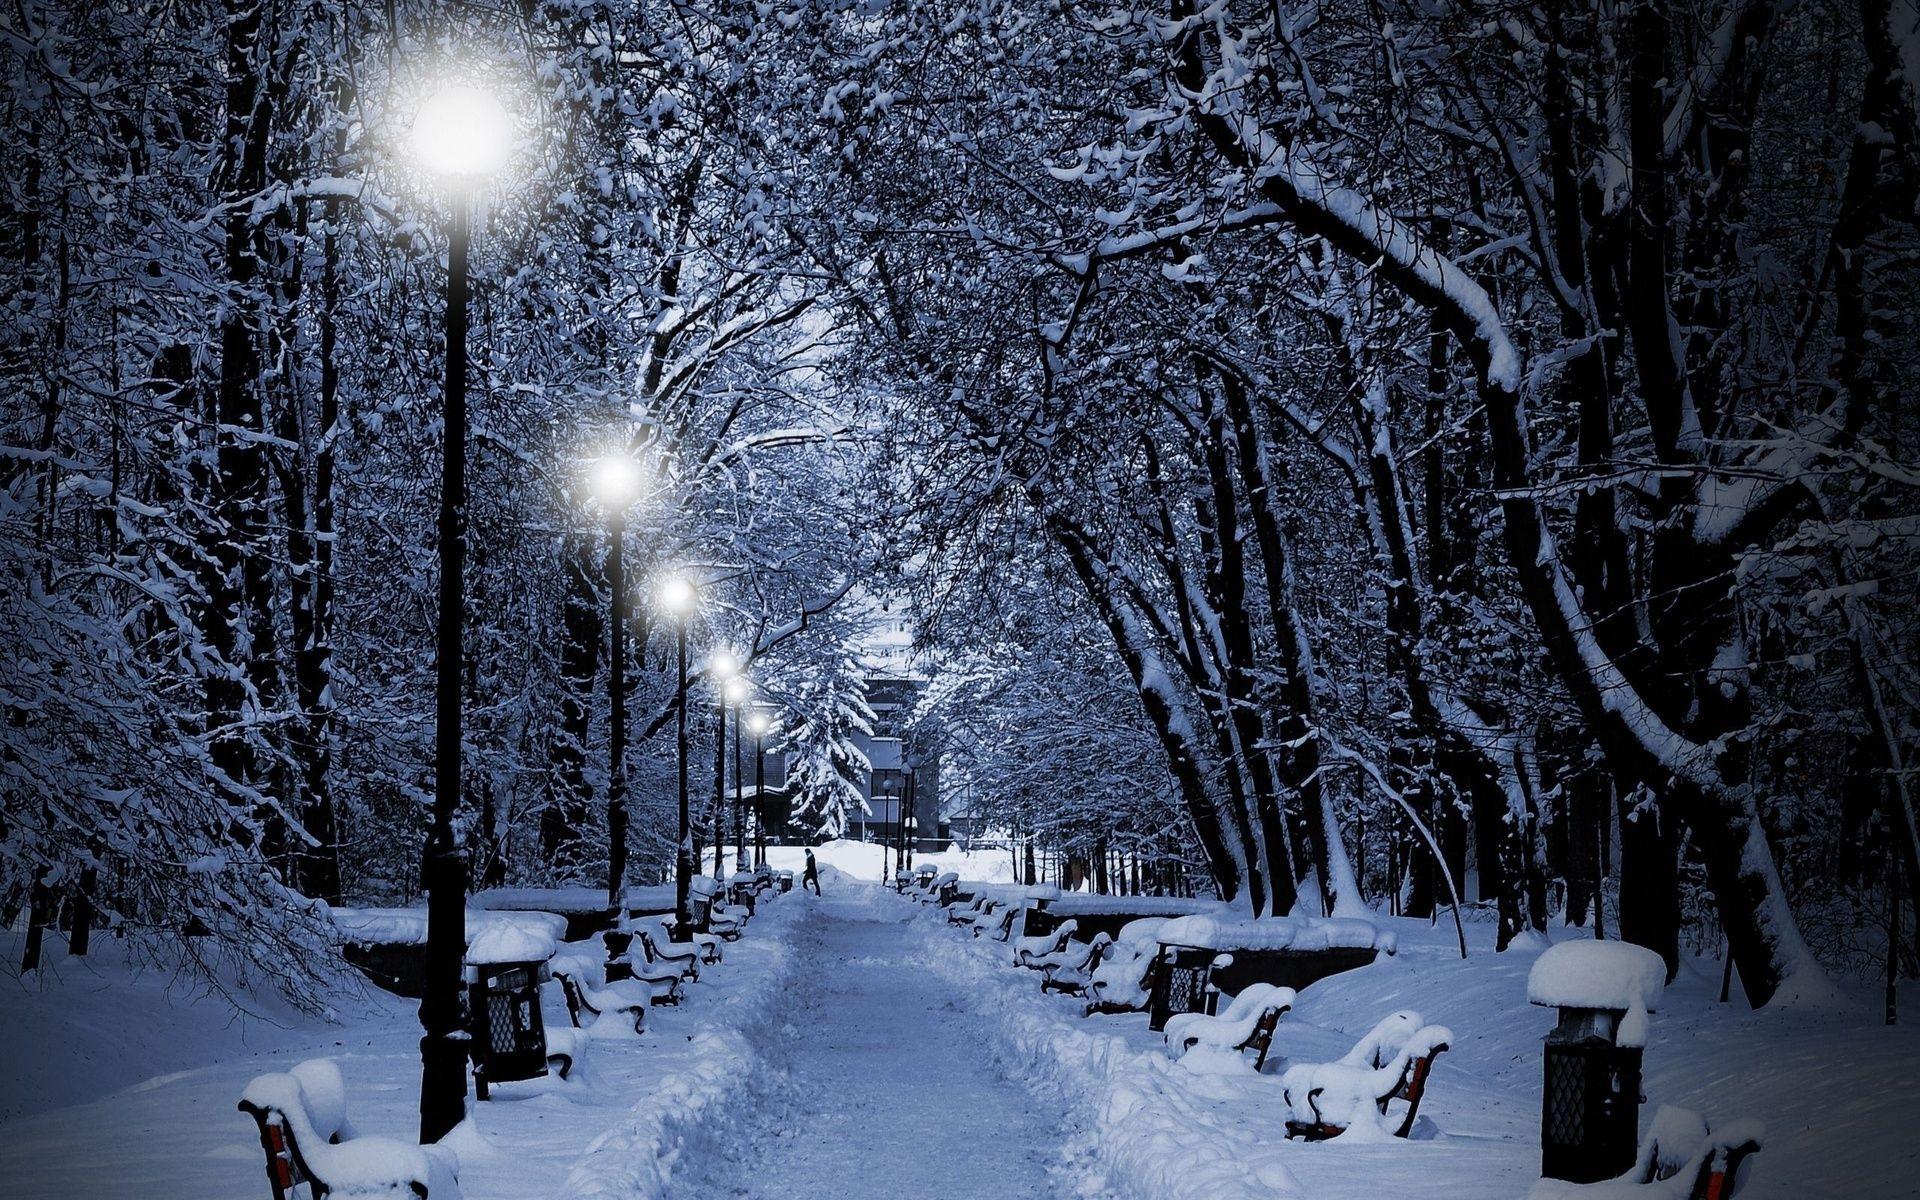 Night Winter Scenes Wallpaper. nature winter snow snowflakes snowing trees park white night. Winter landscape, Winter wallpaper, Wallpaper iphone christmas